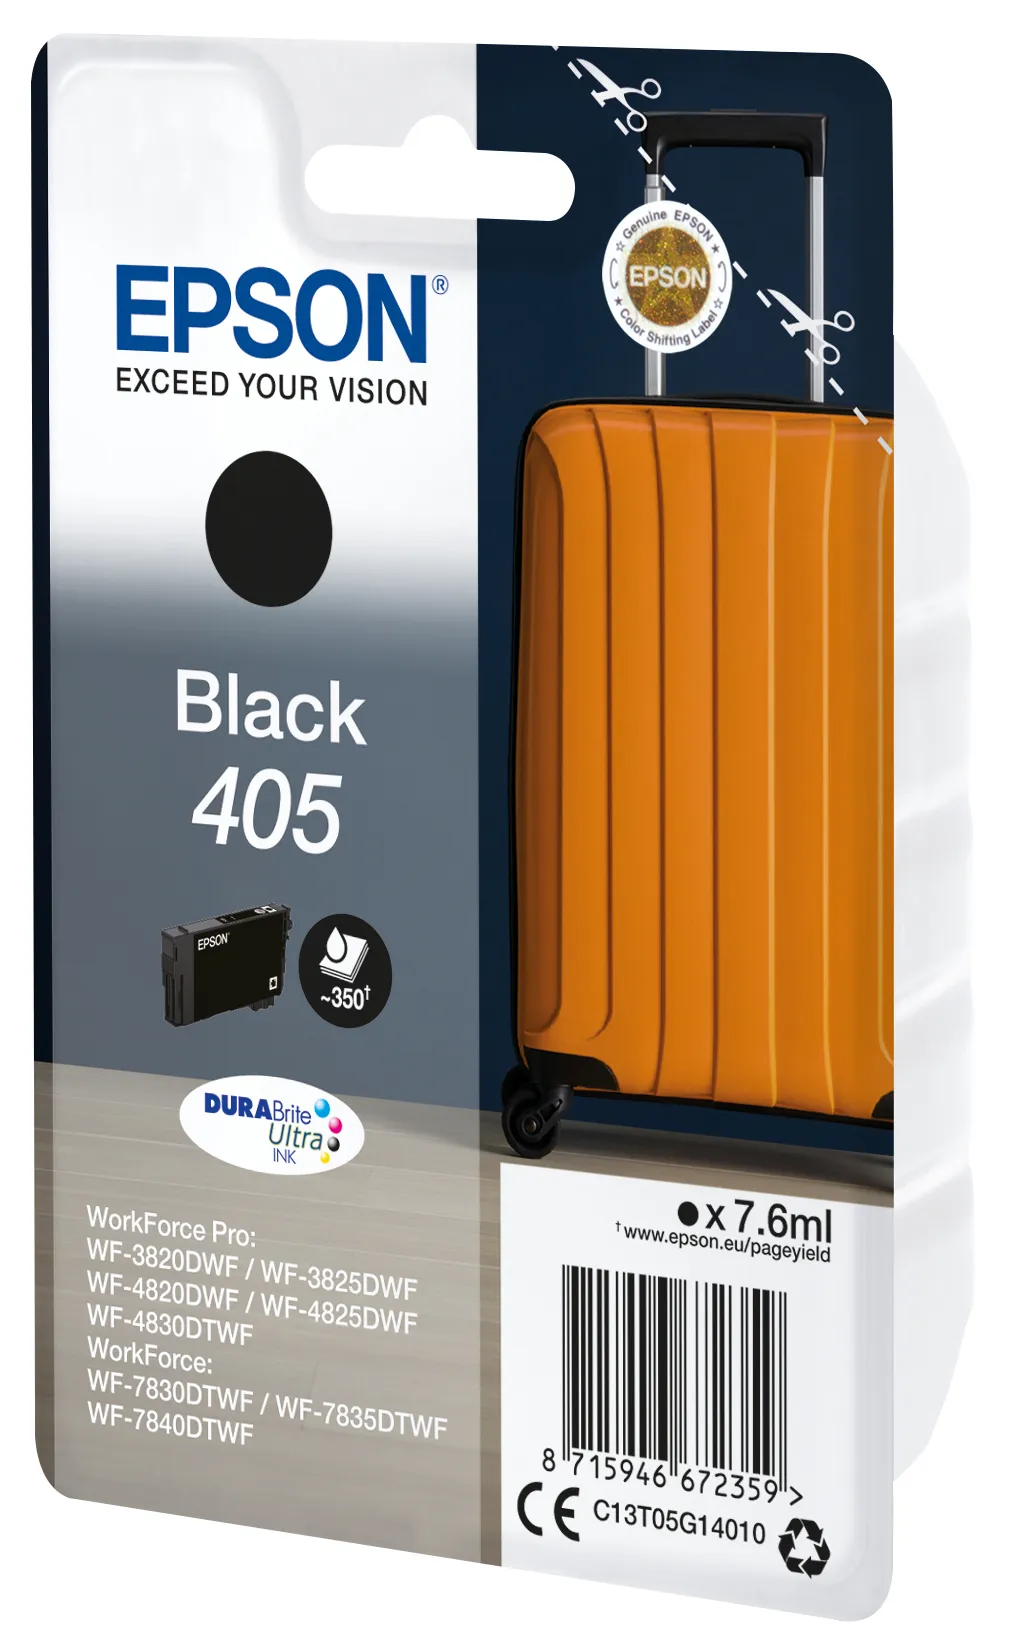 Vente EPSON Singlepack Black 405 DURABrite Ultra Ink Epson au meilleur prix - visuel 4